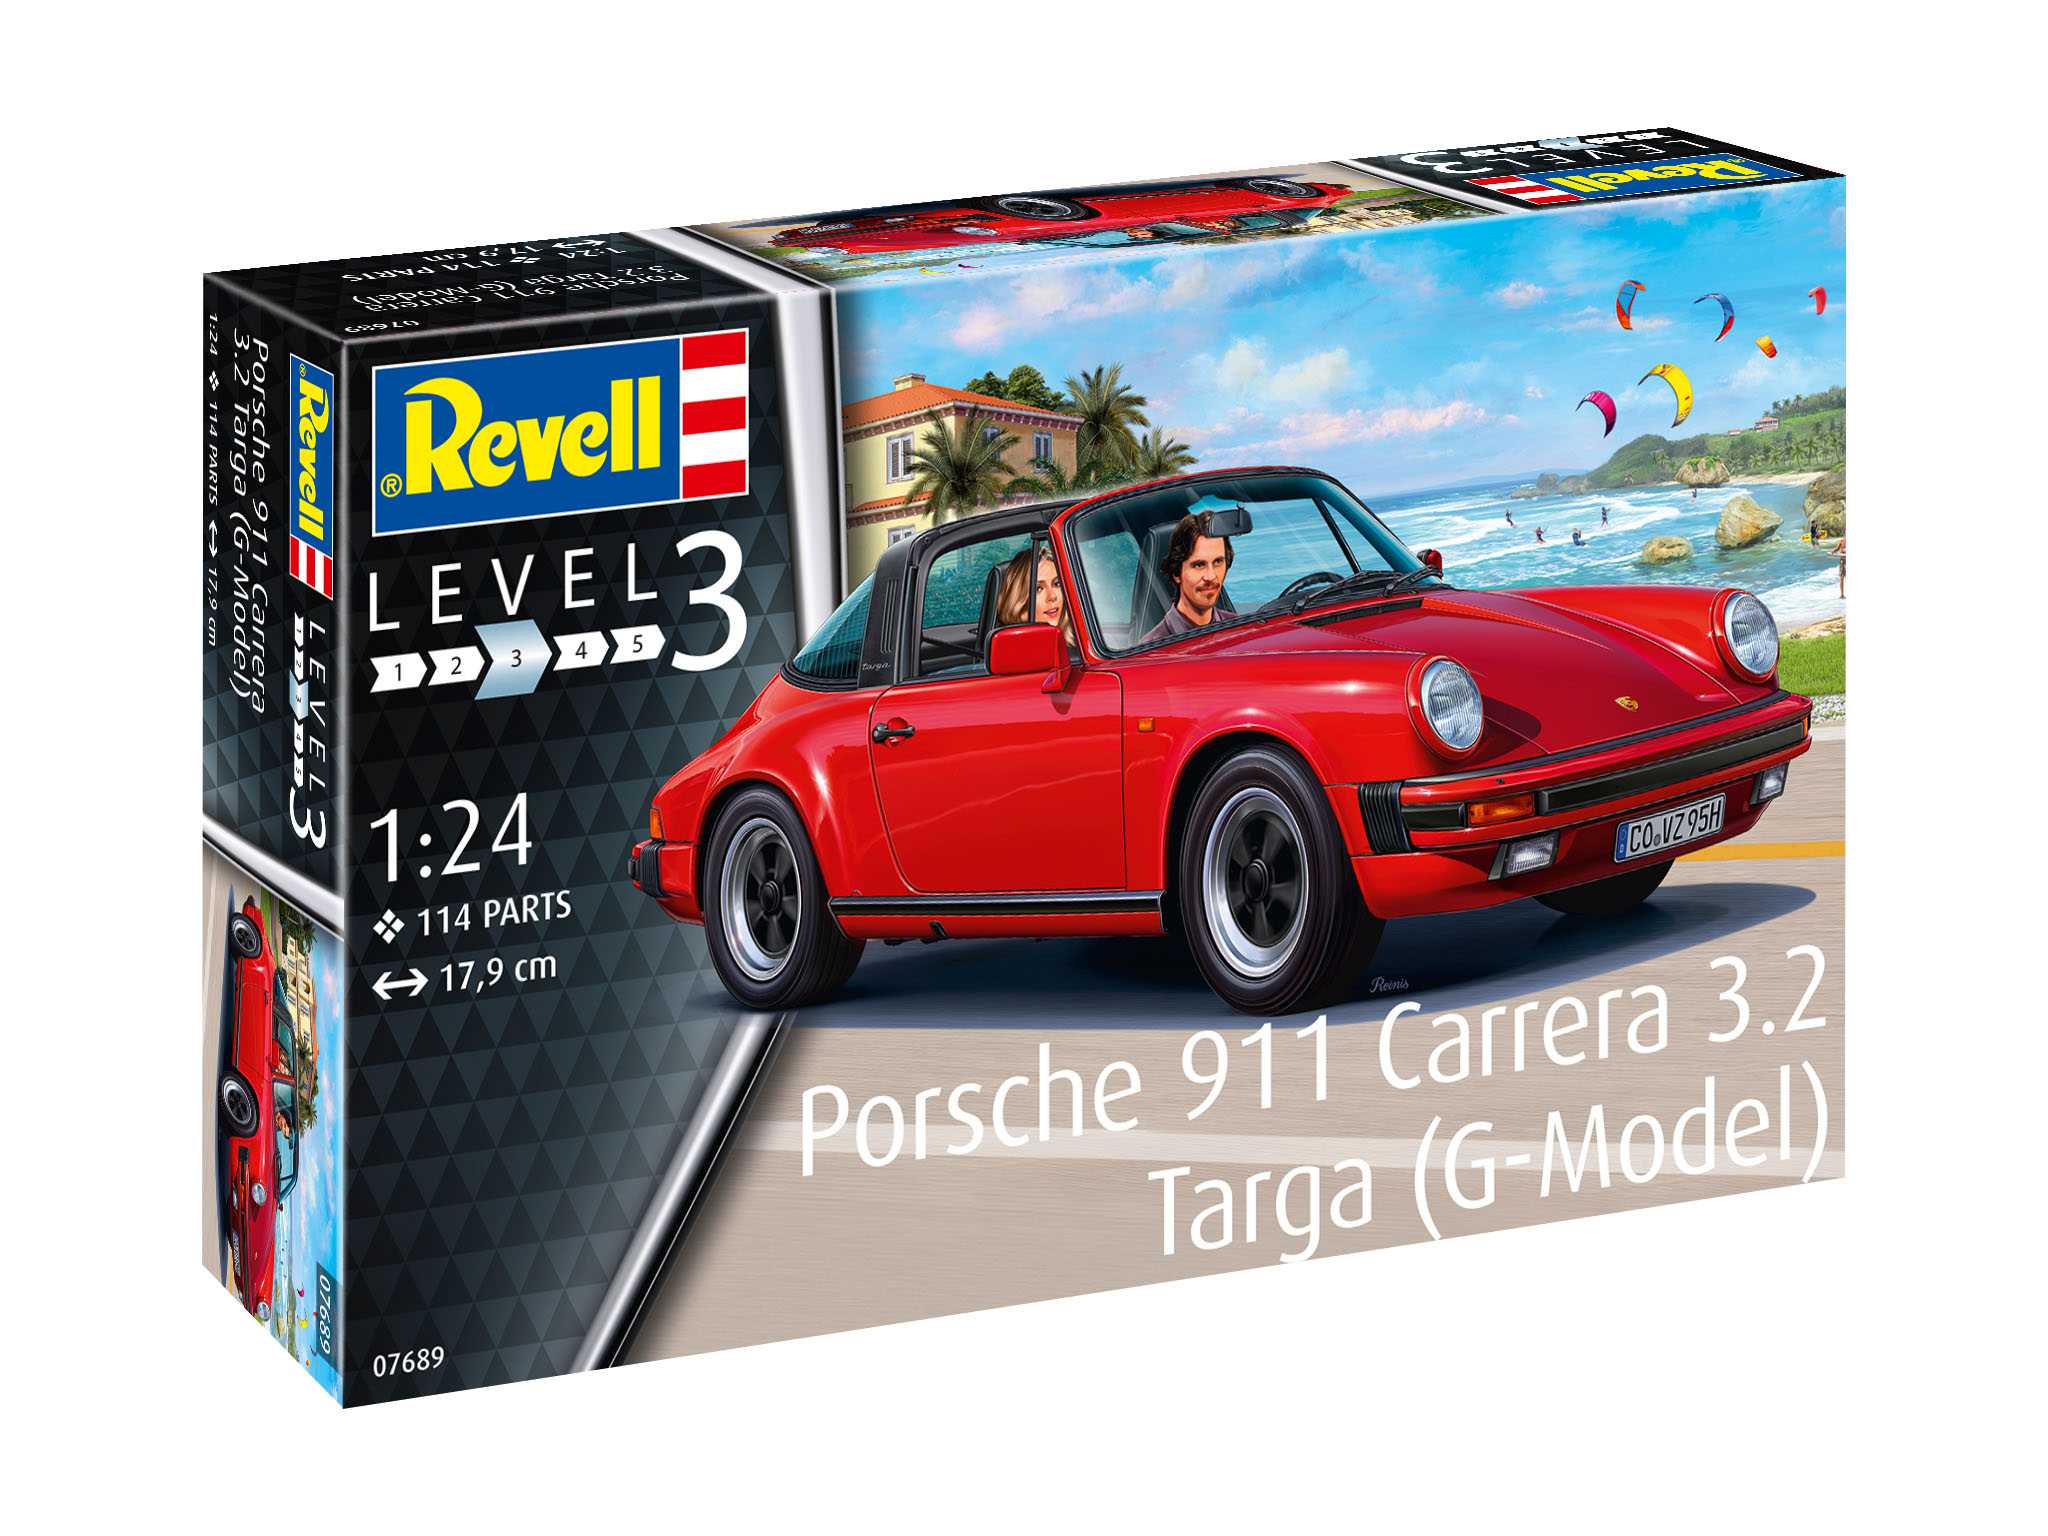 Fotografie Plastic ModelKit auto 07689 - Porsche 911 Targa (G-Model) (1:24)